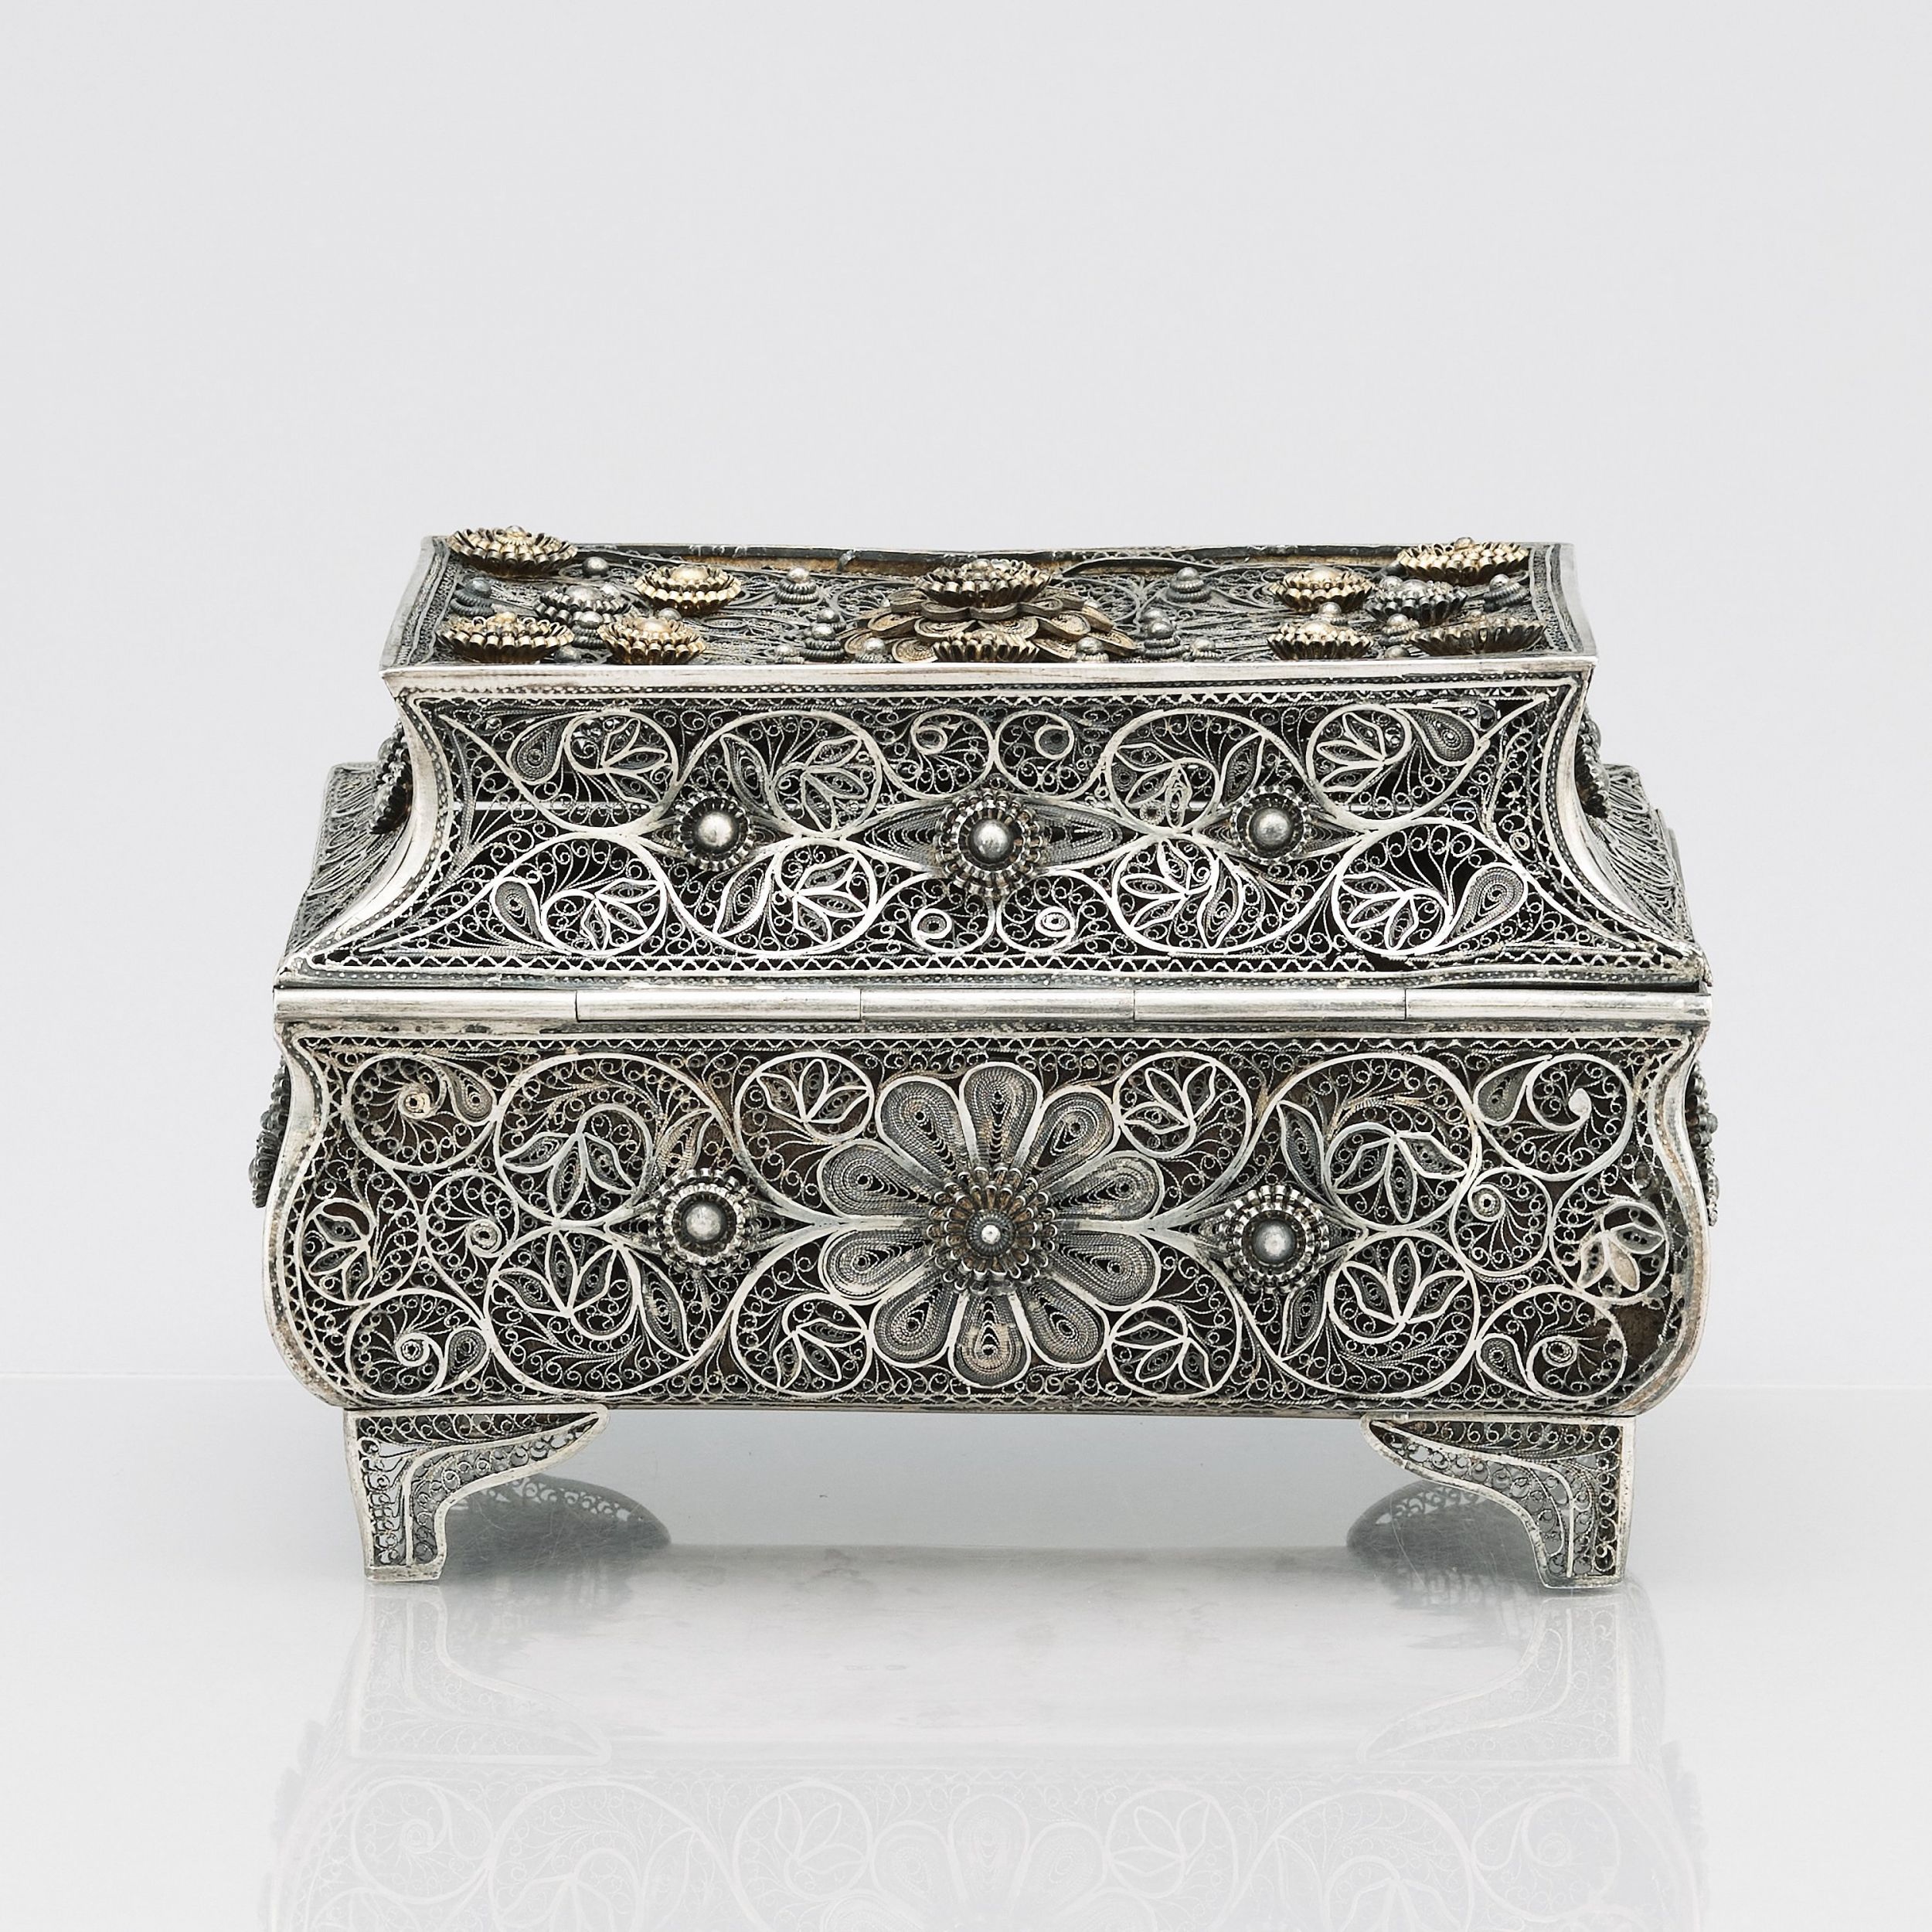 Silver filigree box from the 19th century. Odessa, Russian Empire, 1898-1908 - Image 5 of 7